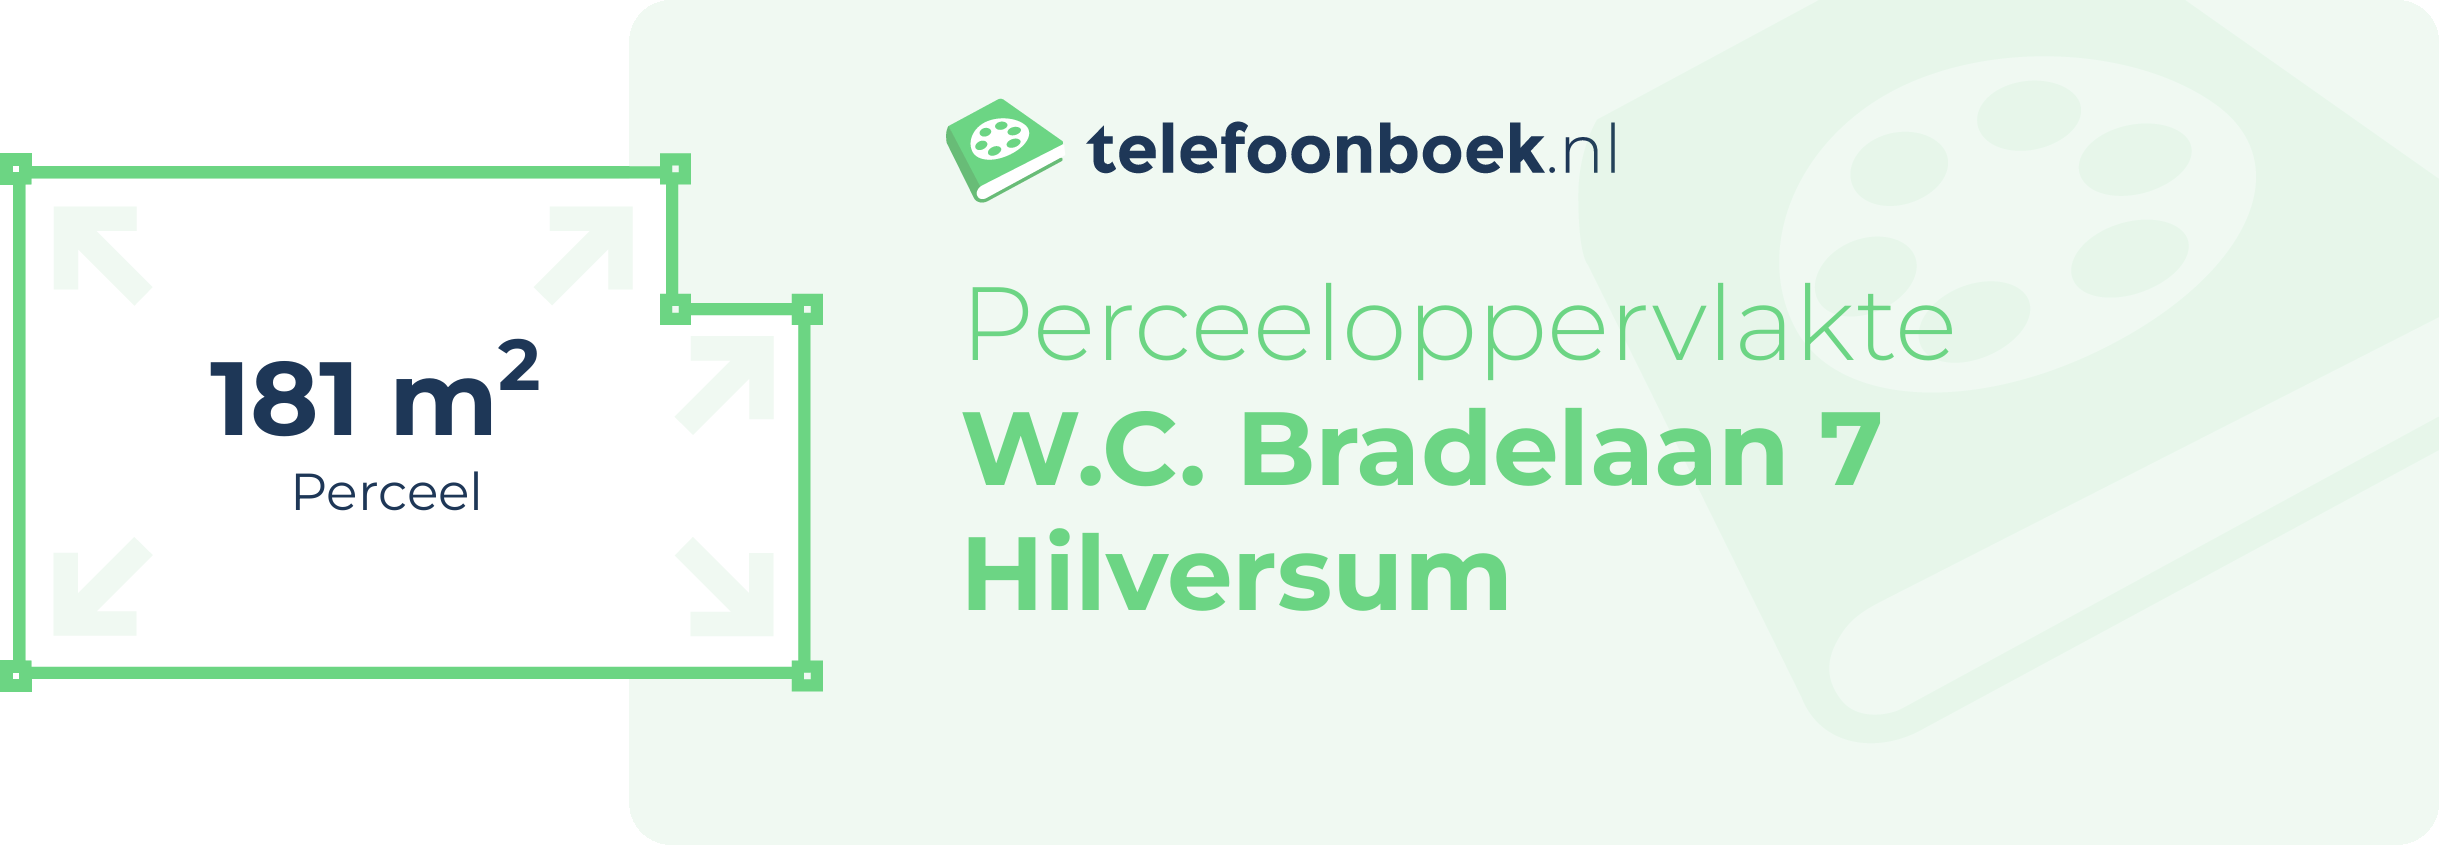 Perceeloppervlakte W.C. Bradelaan 7 Hilversum